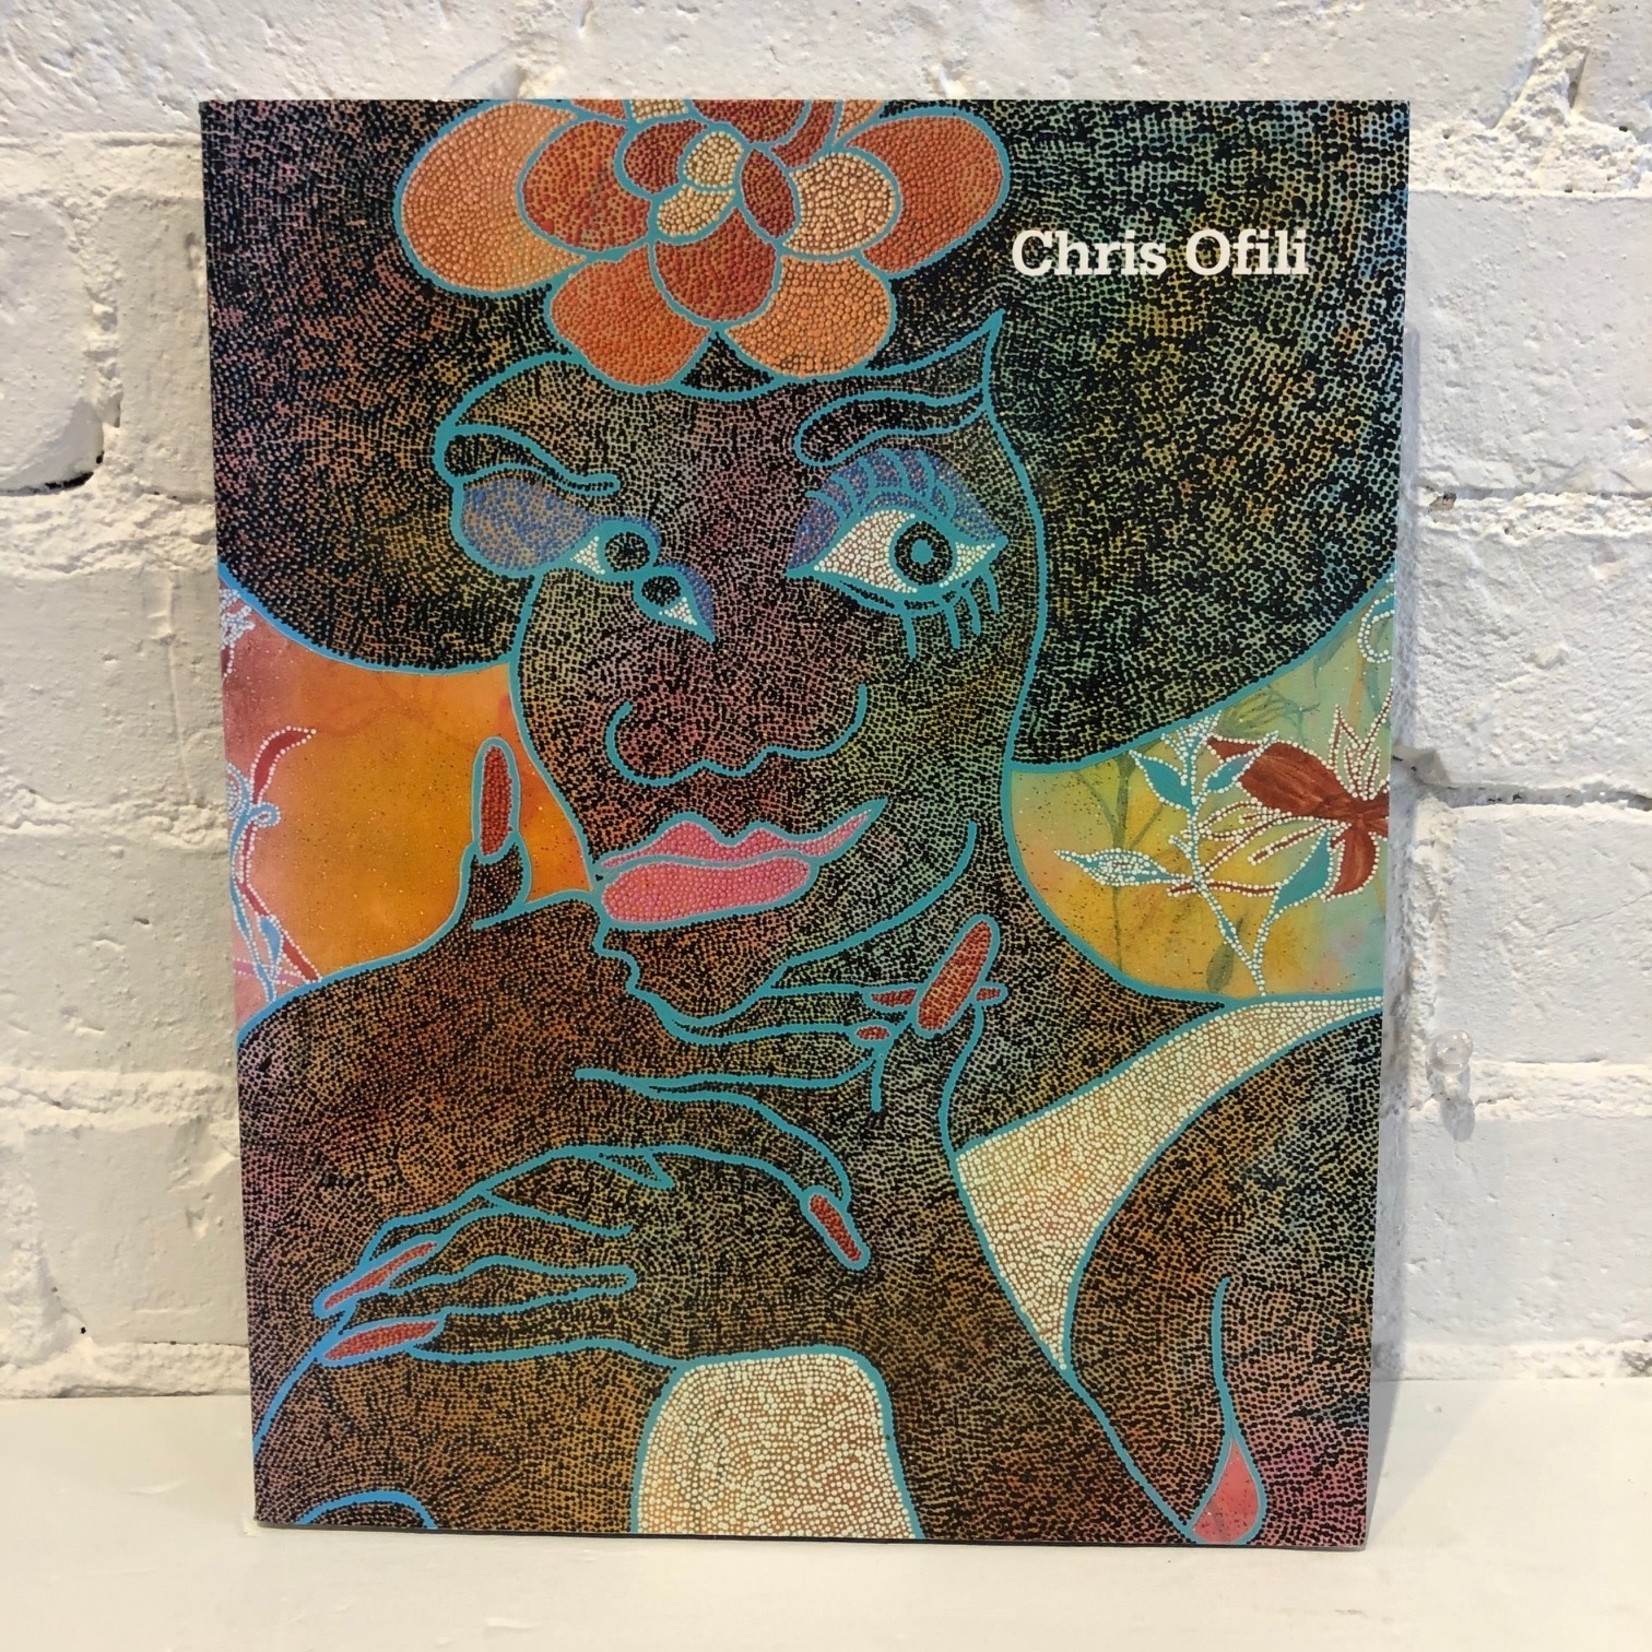 Chris Ofili edited by Judith Nesbitt